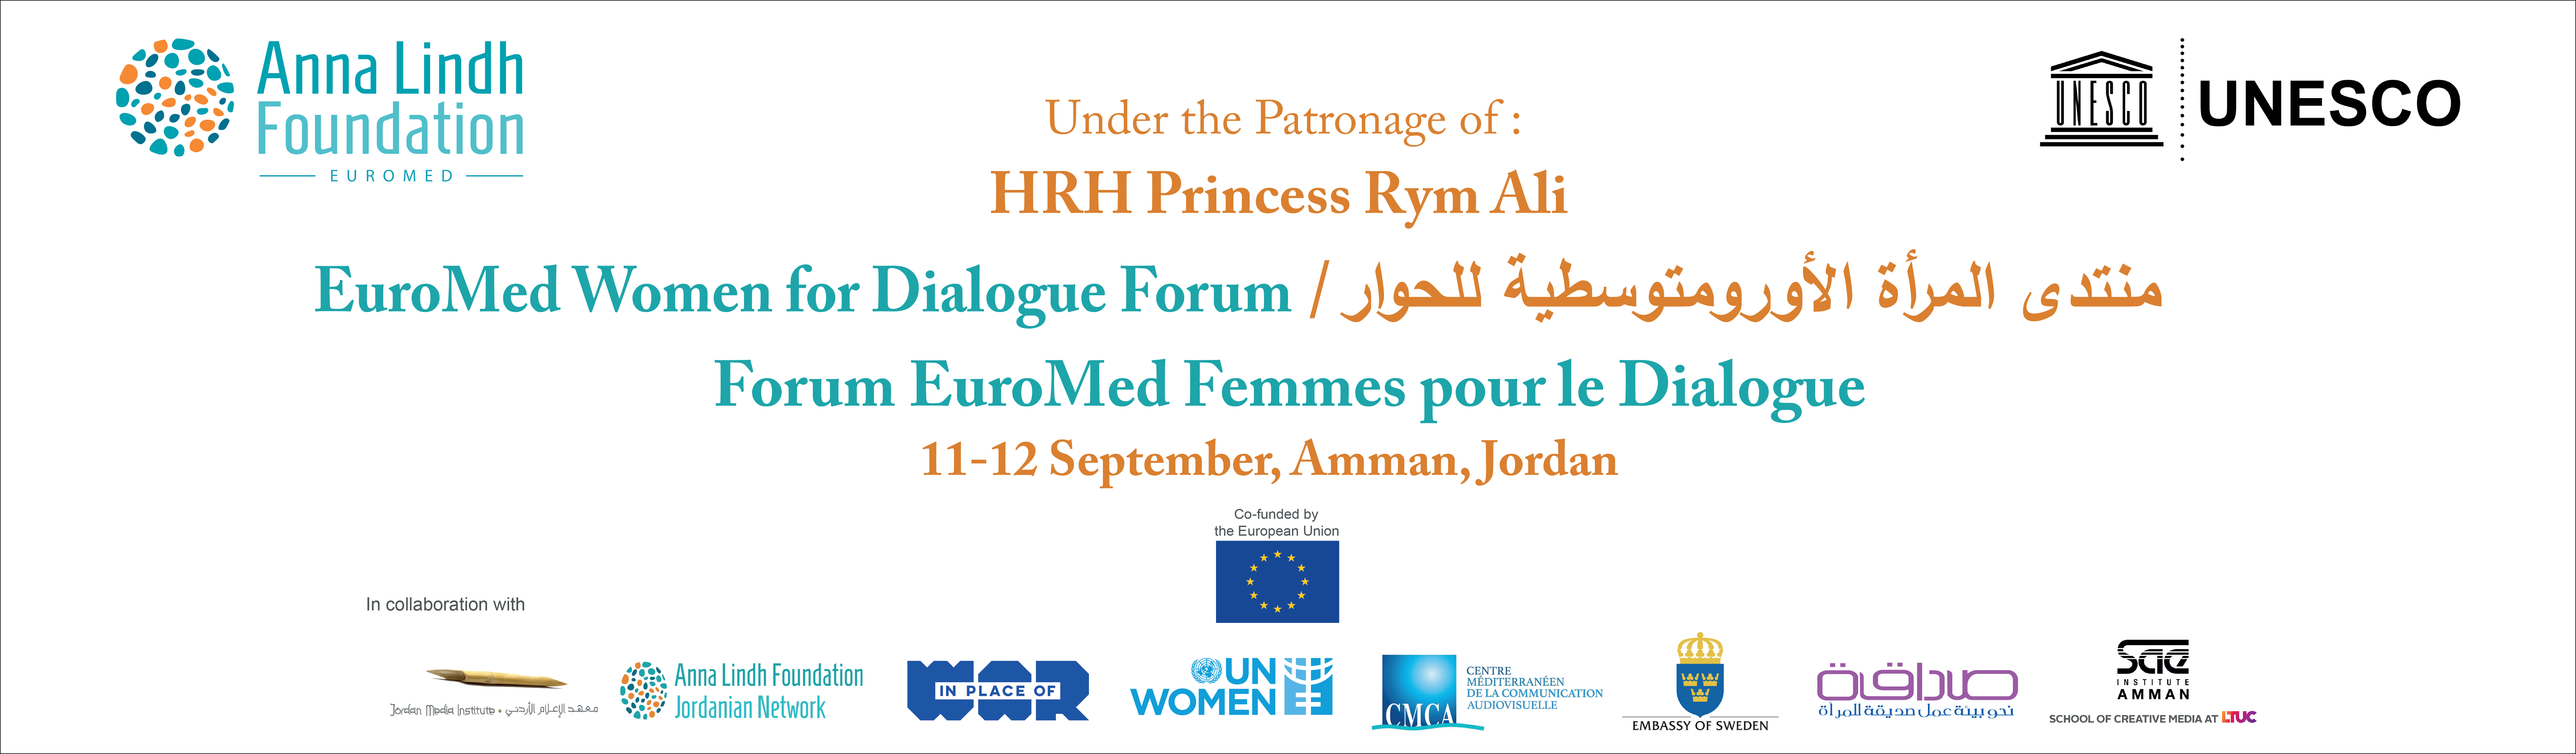 EuroMed Women for Dialogue Forum